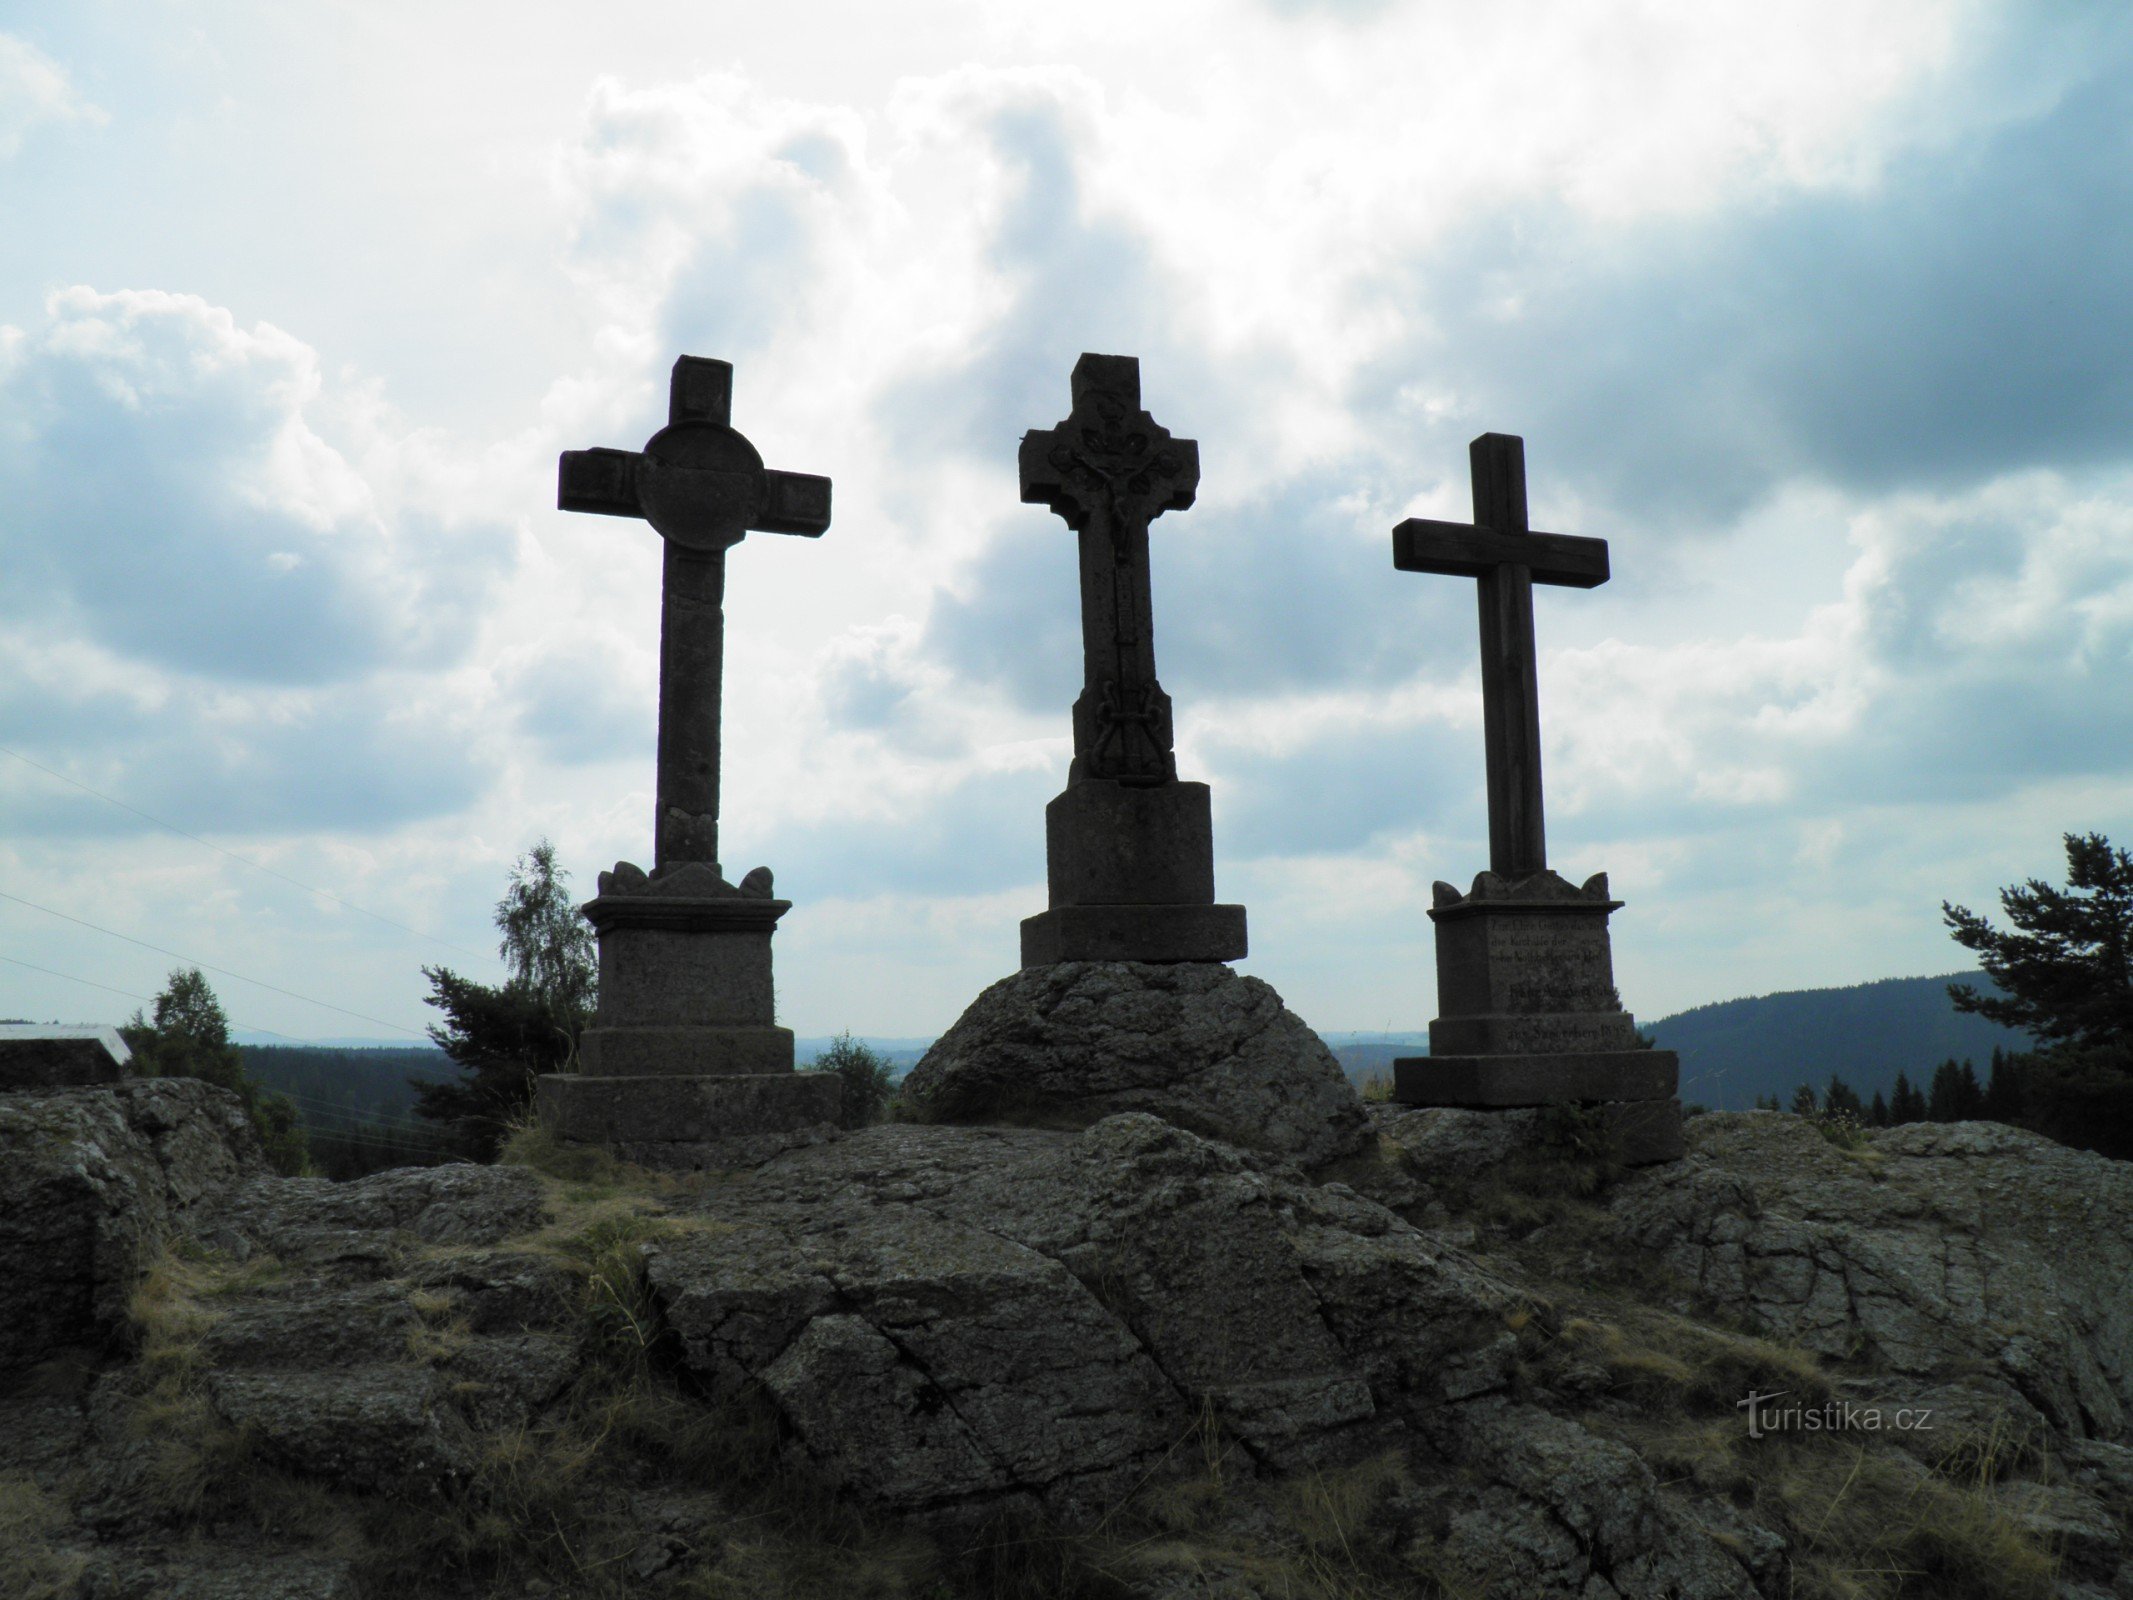 Tre kors nära byn Prameny.